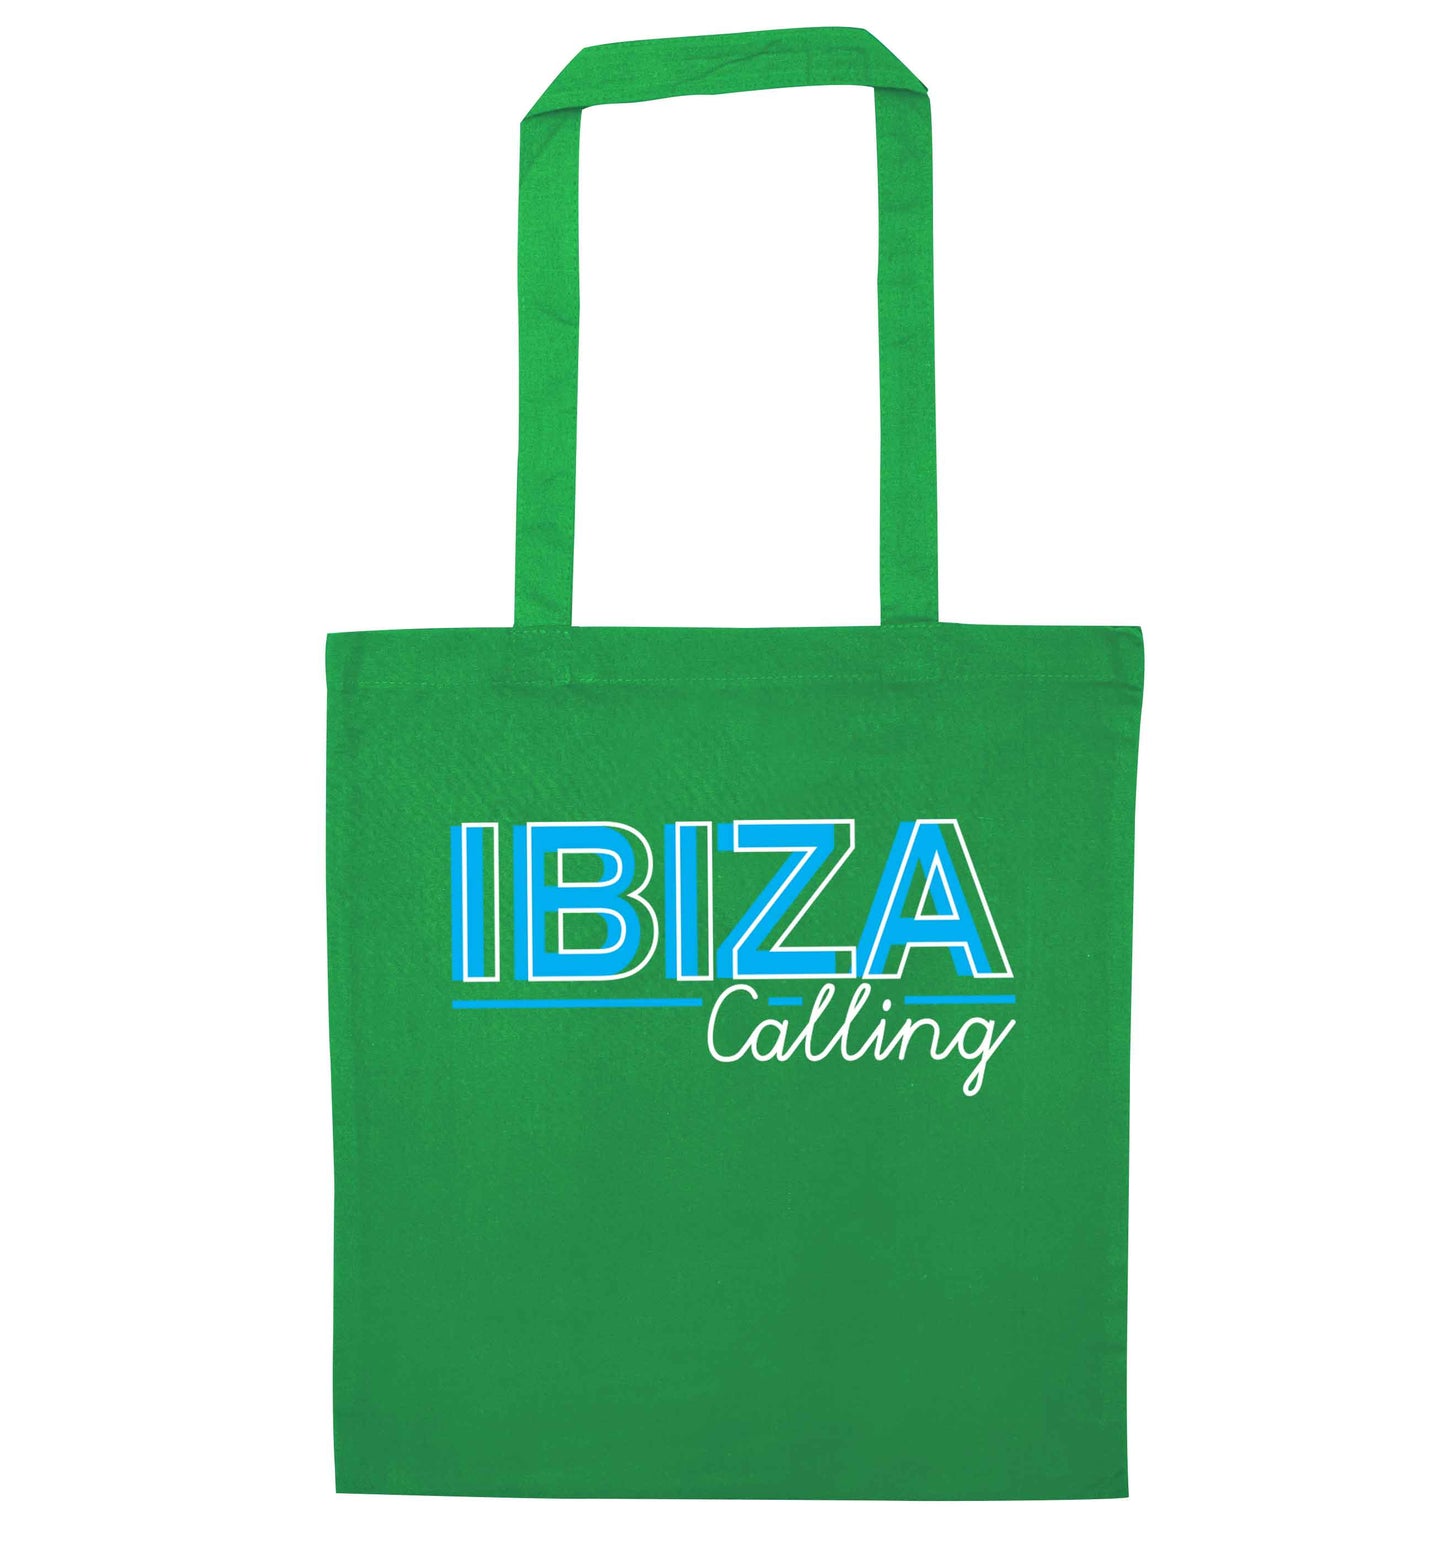 Ibiza calling green tote bag